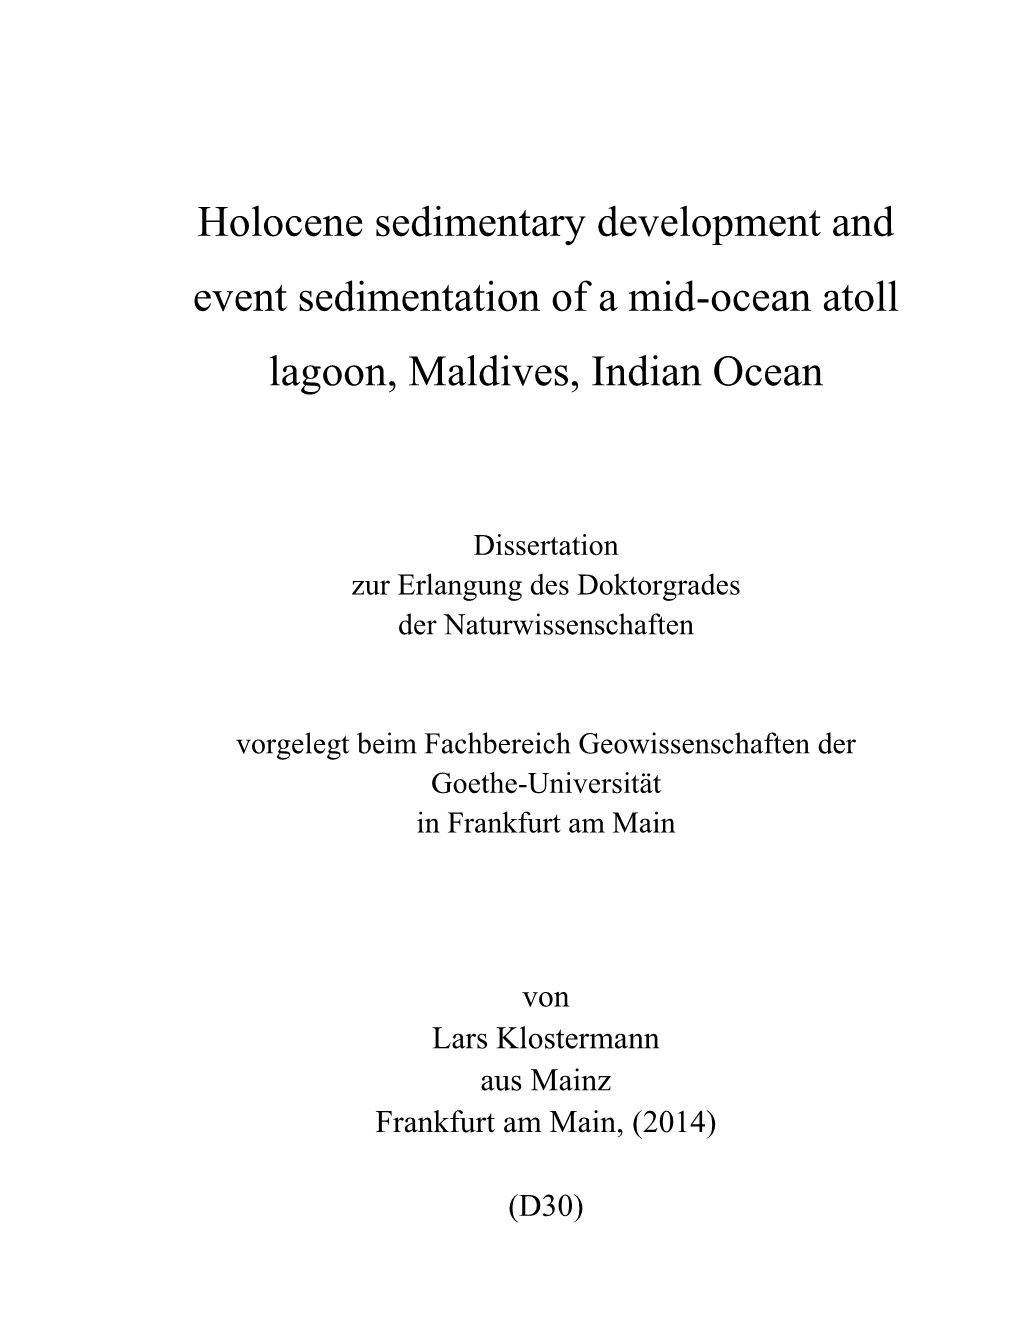 Holocene Sedimentary Development and Event Sedimentation of a Mid-Ocean Atoll Lagoon, Maldives, Indian Ocean